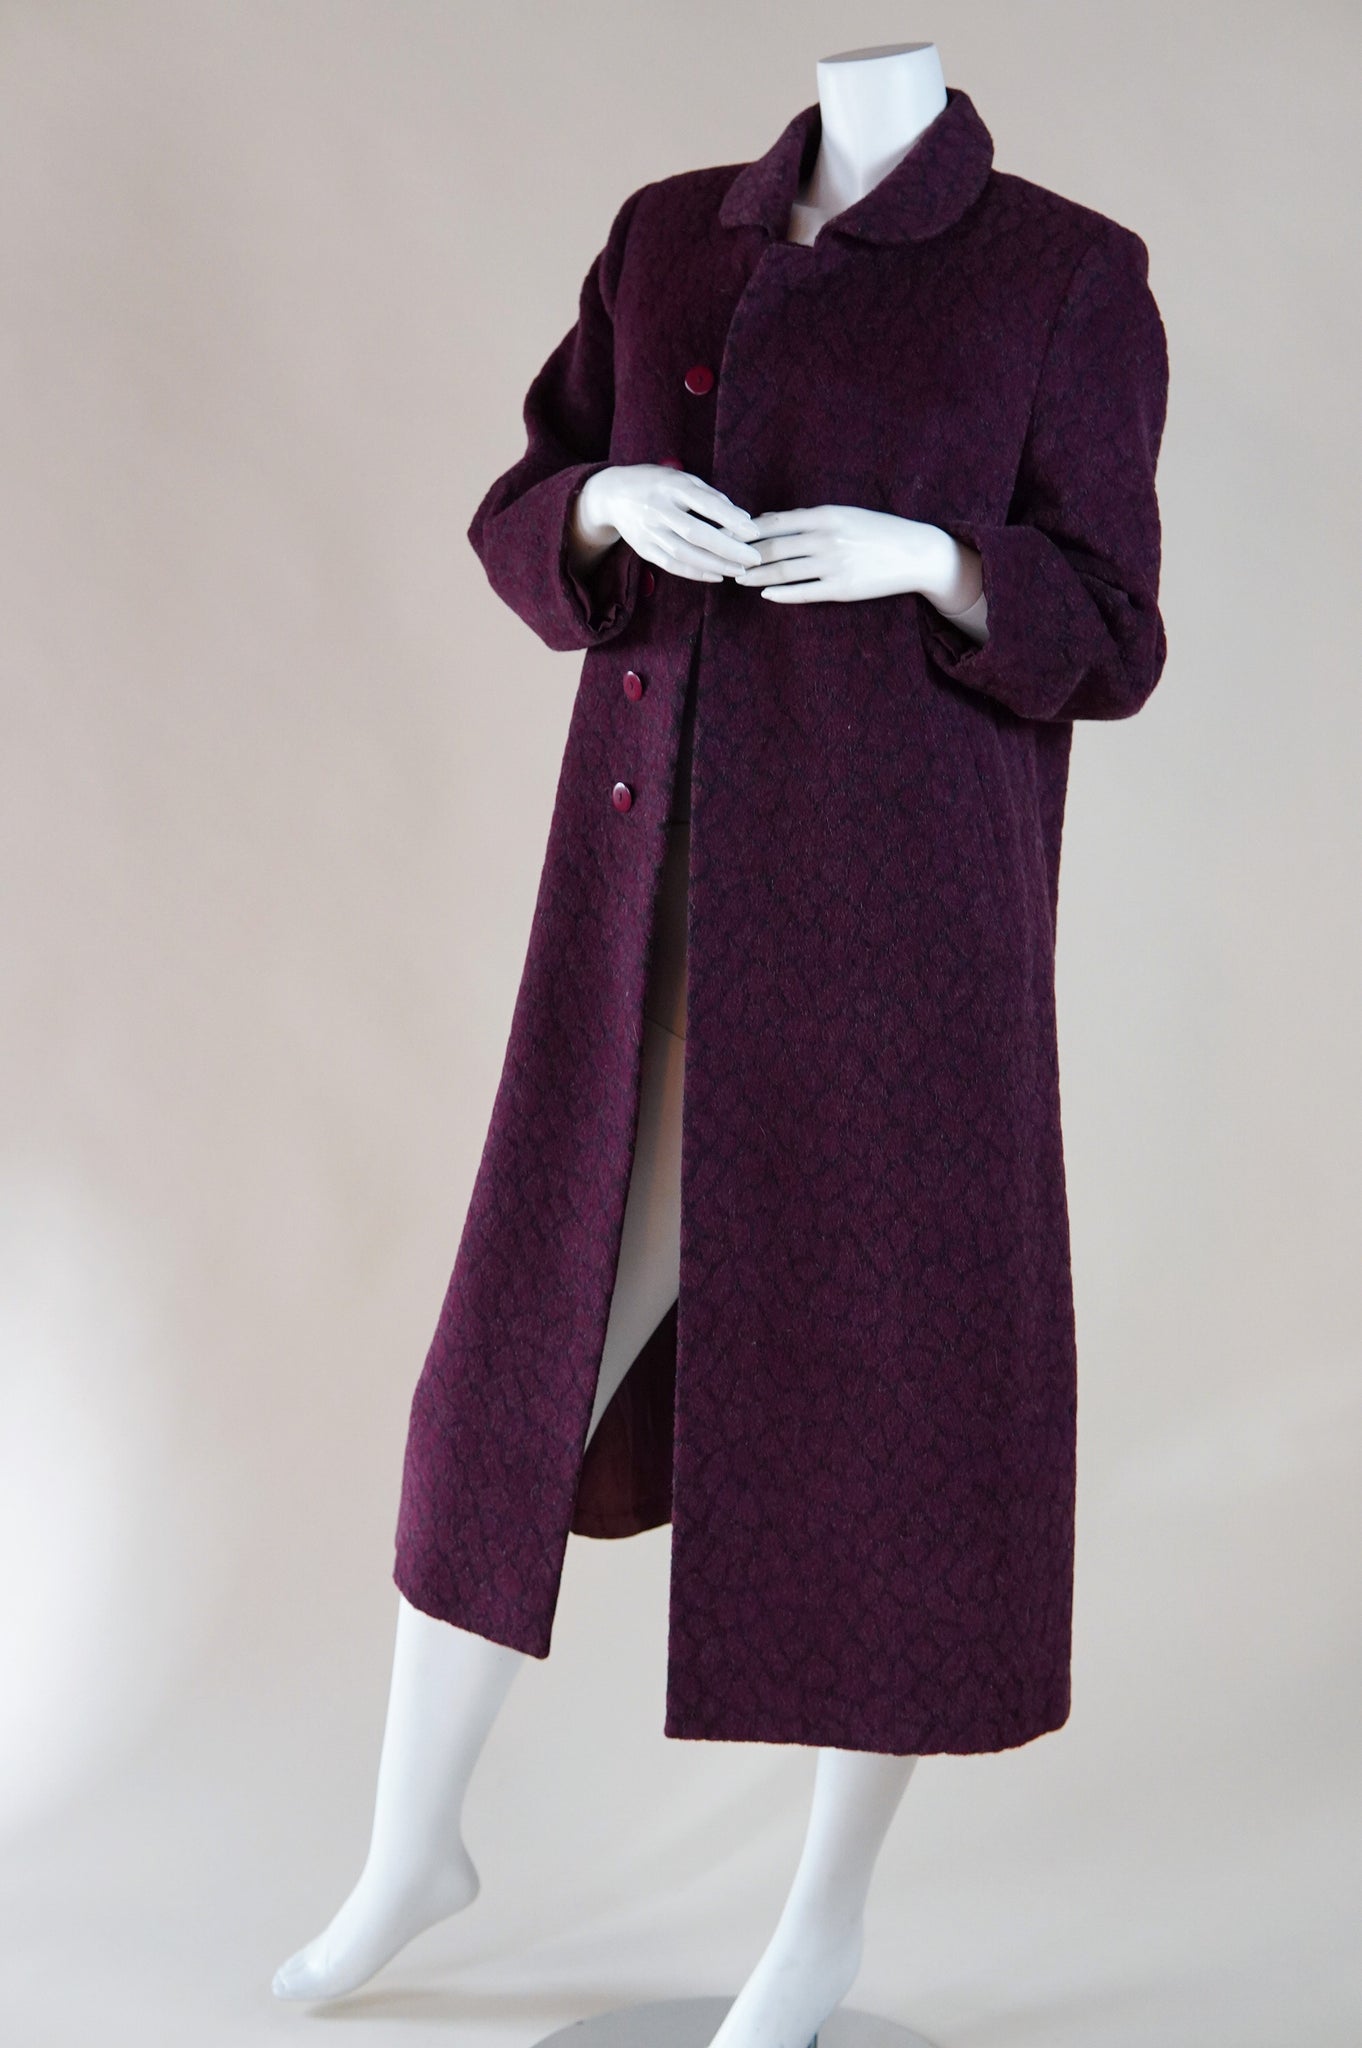 late 1970s early 1980s tone on tone wool coat - M